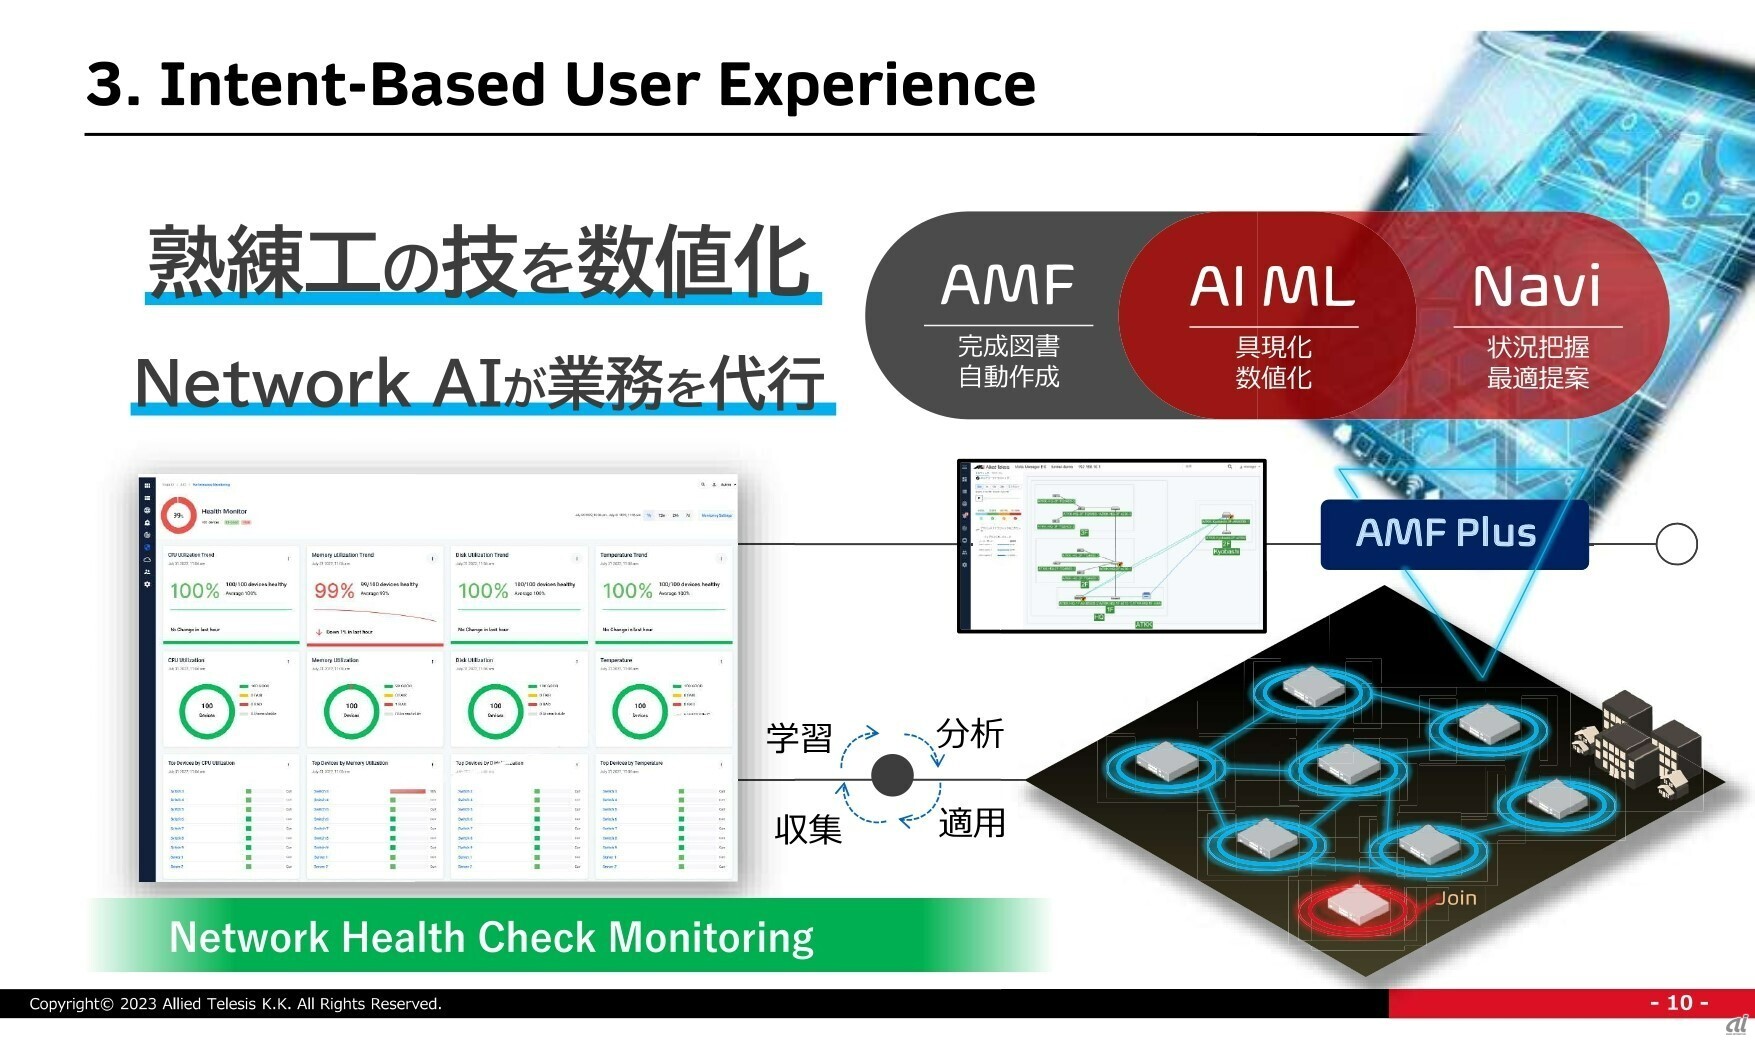 Network Health Check Monitoringに表示される各デバイスの監視パロメーターは「CPUの使用率」「メモリーの使用量」「フラッシュの使用量」「筐体温度」の4つ